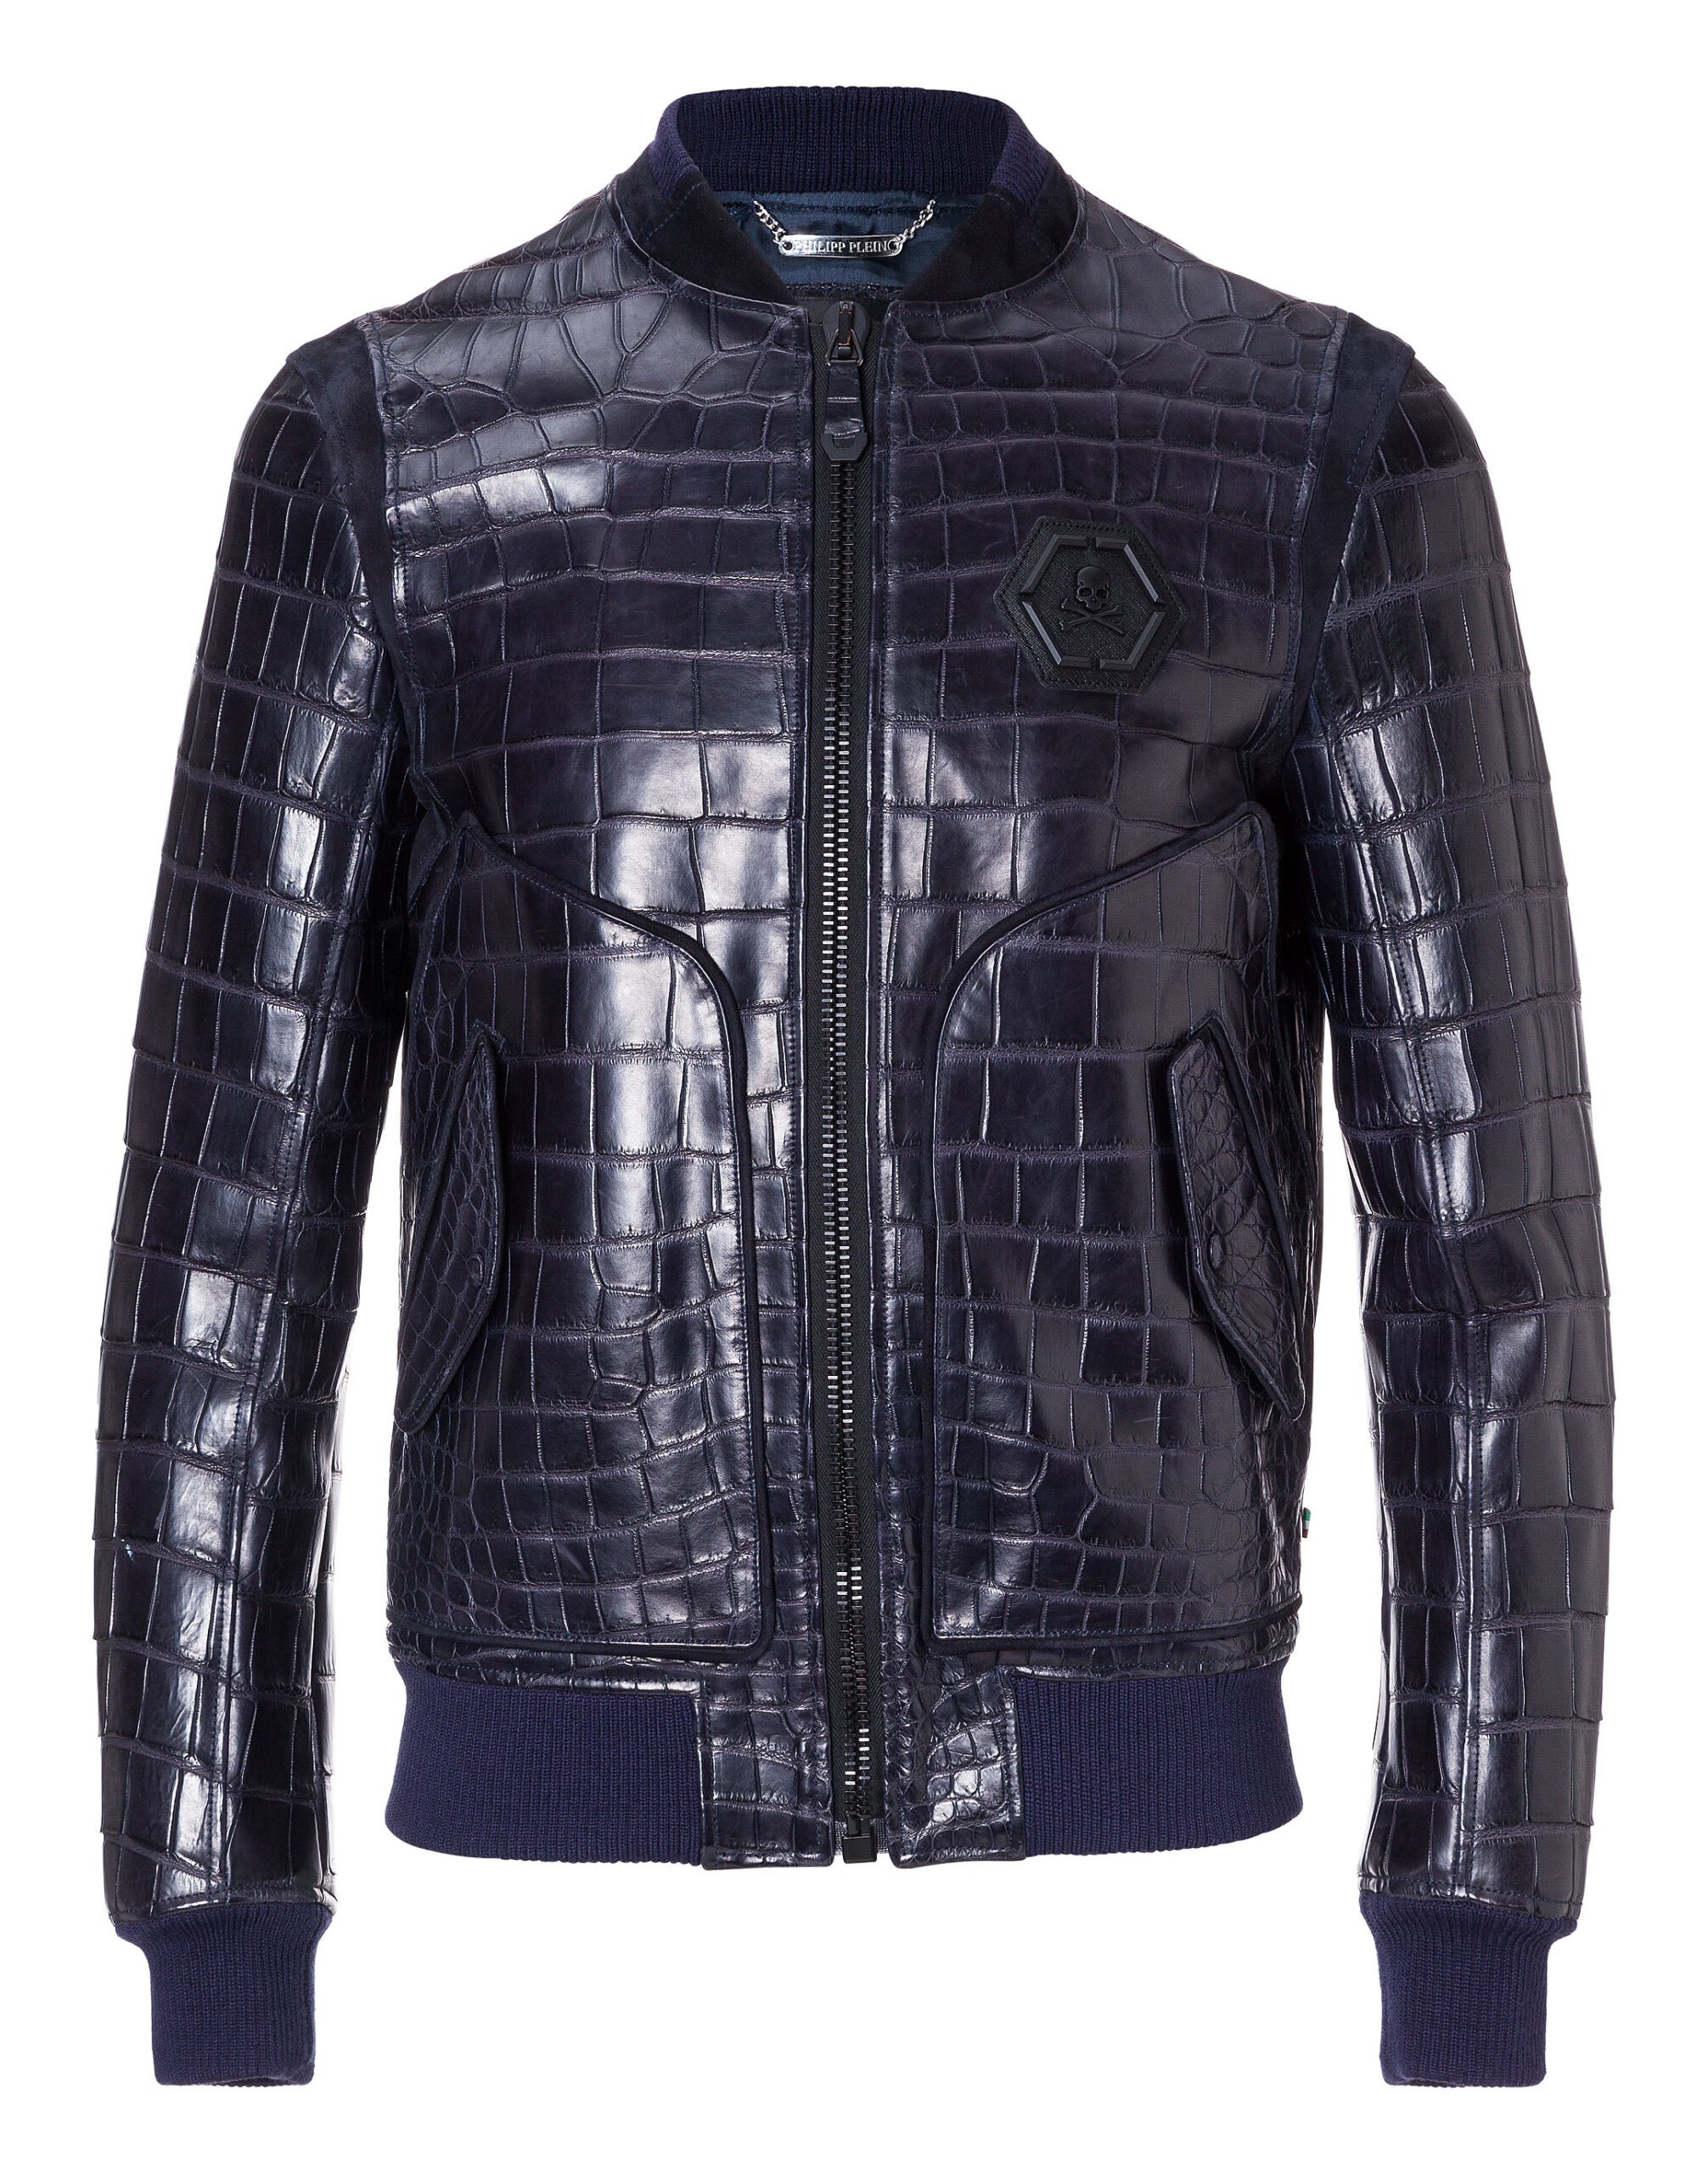 Philipp Plein Crocodile Jacket - Leather Guys: Luxury Leather Jackets